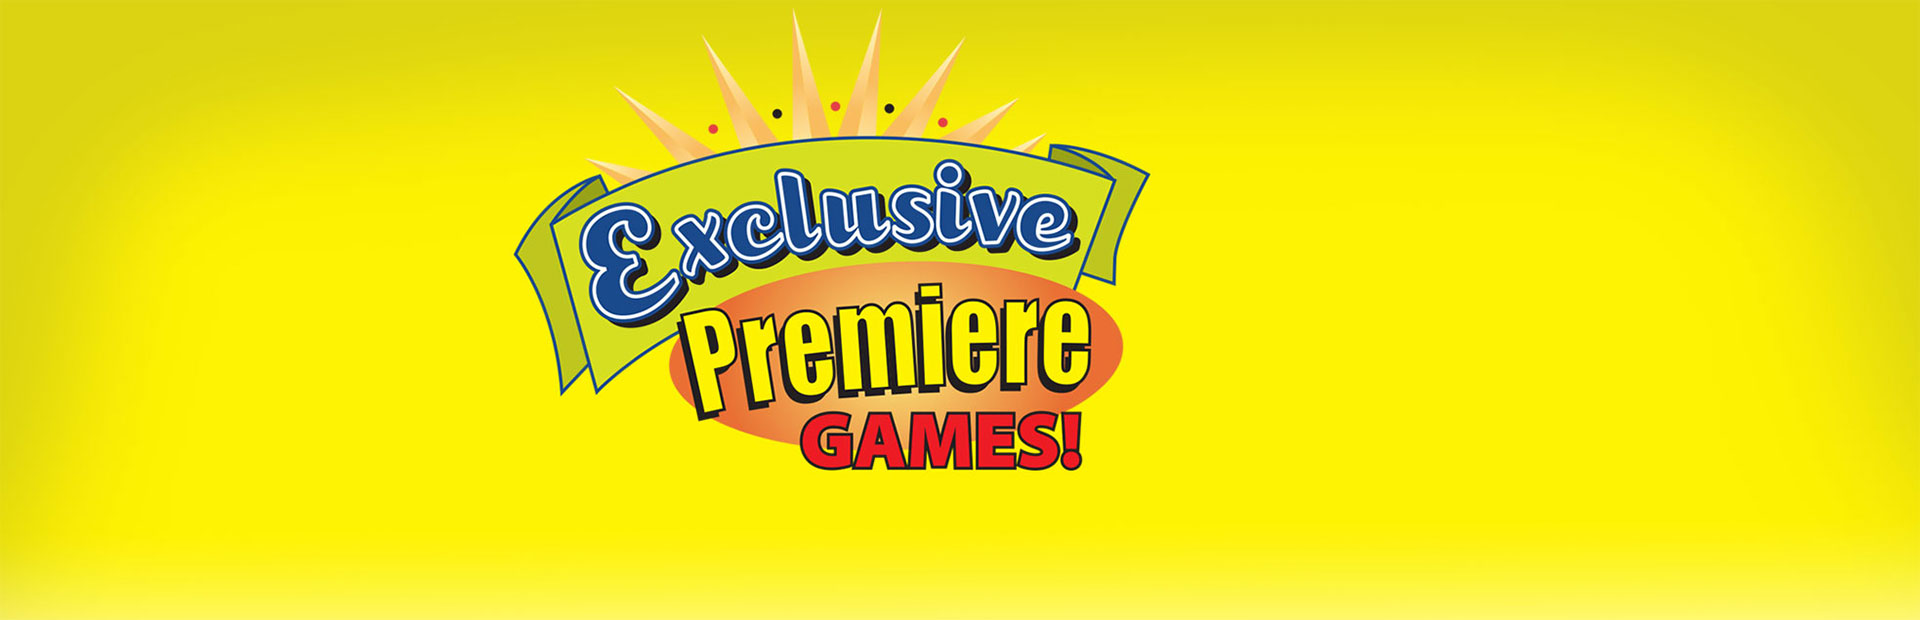 Exclusive Premiere Games at Atlantis